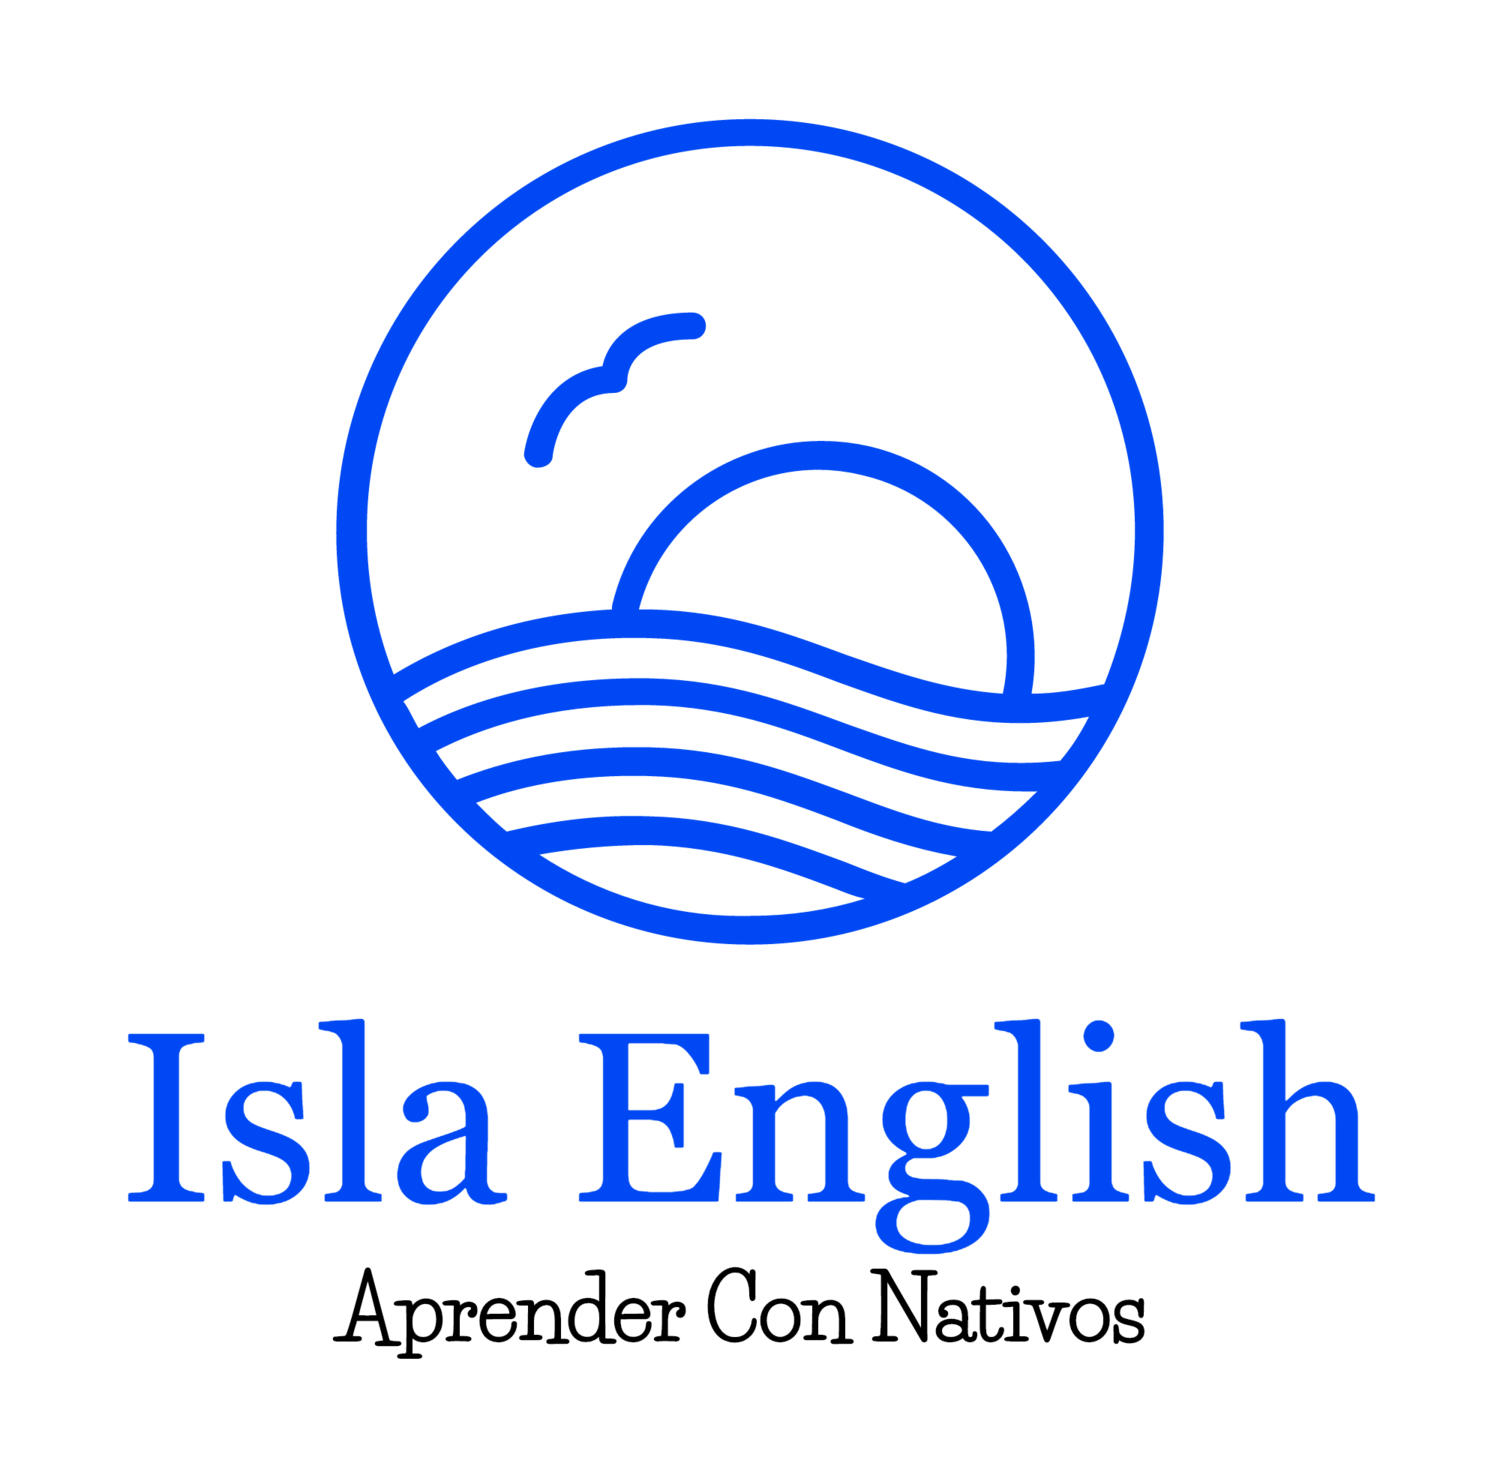 Isla English